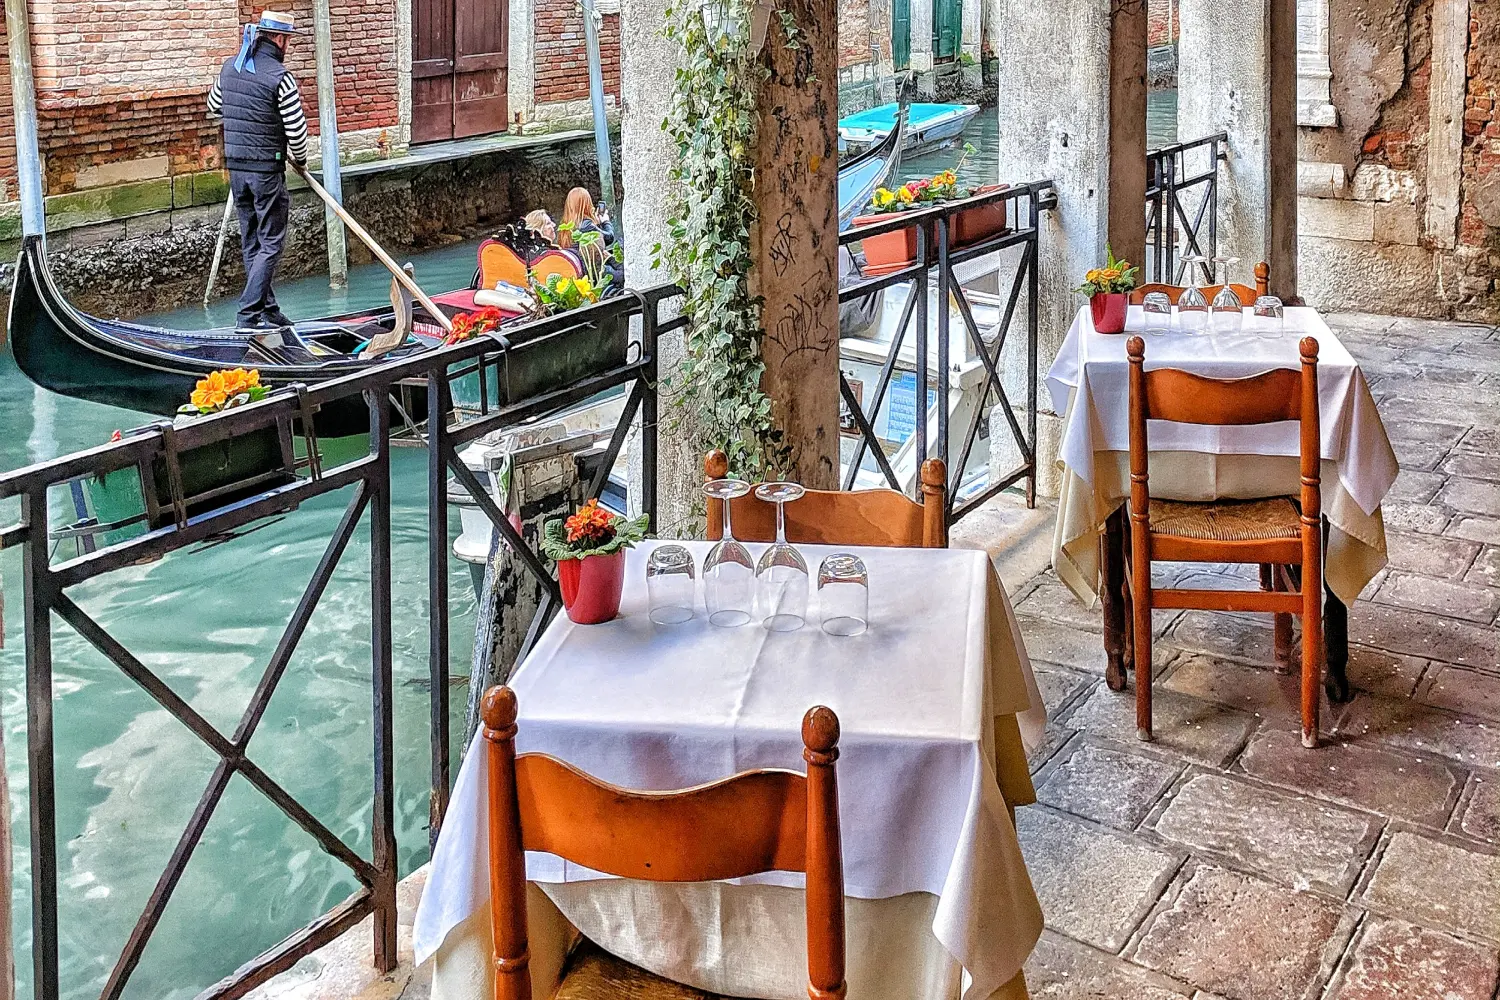 Italian Island ferries - Romantic restaurant alongside the canal of Venice